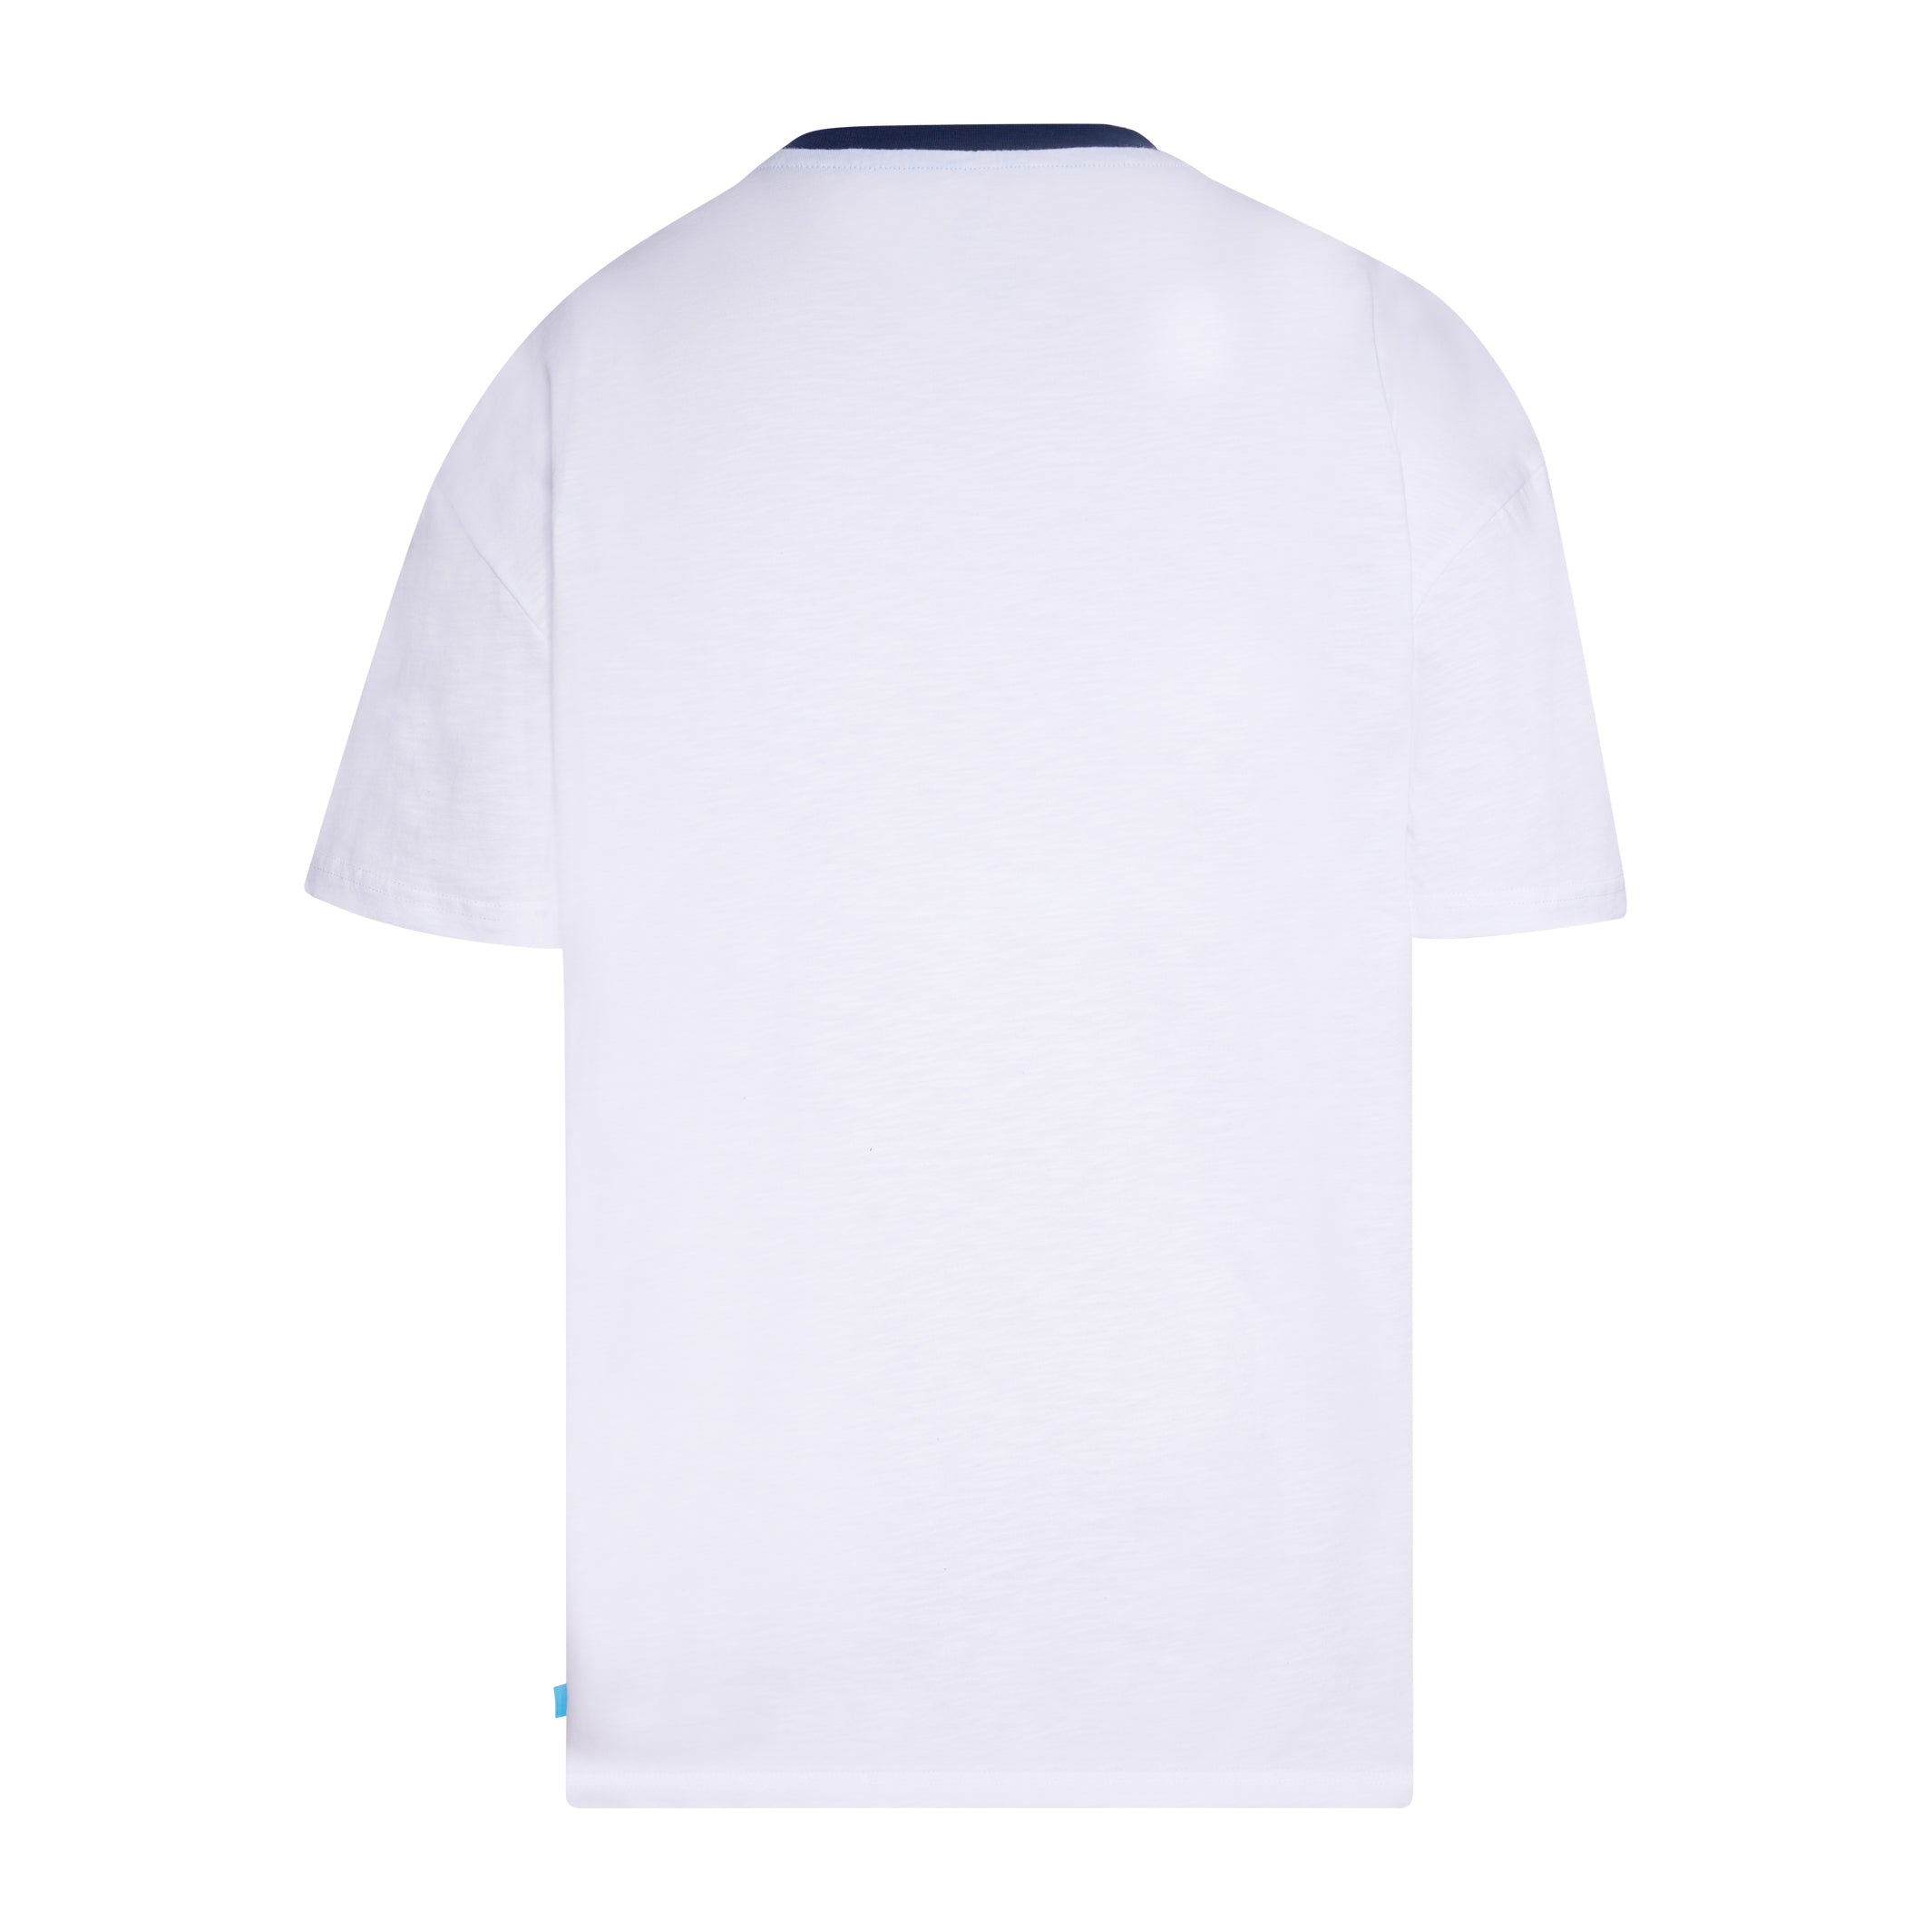 Men's White T-Shirt Camouflage Pocket Back View